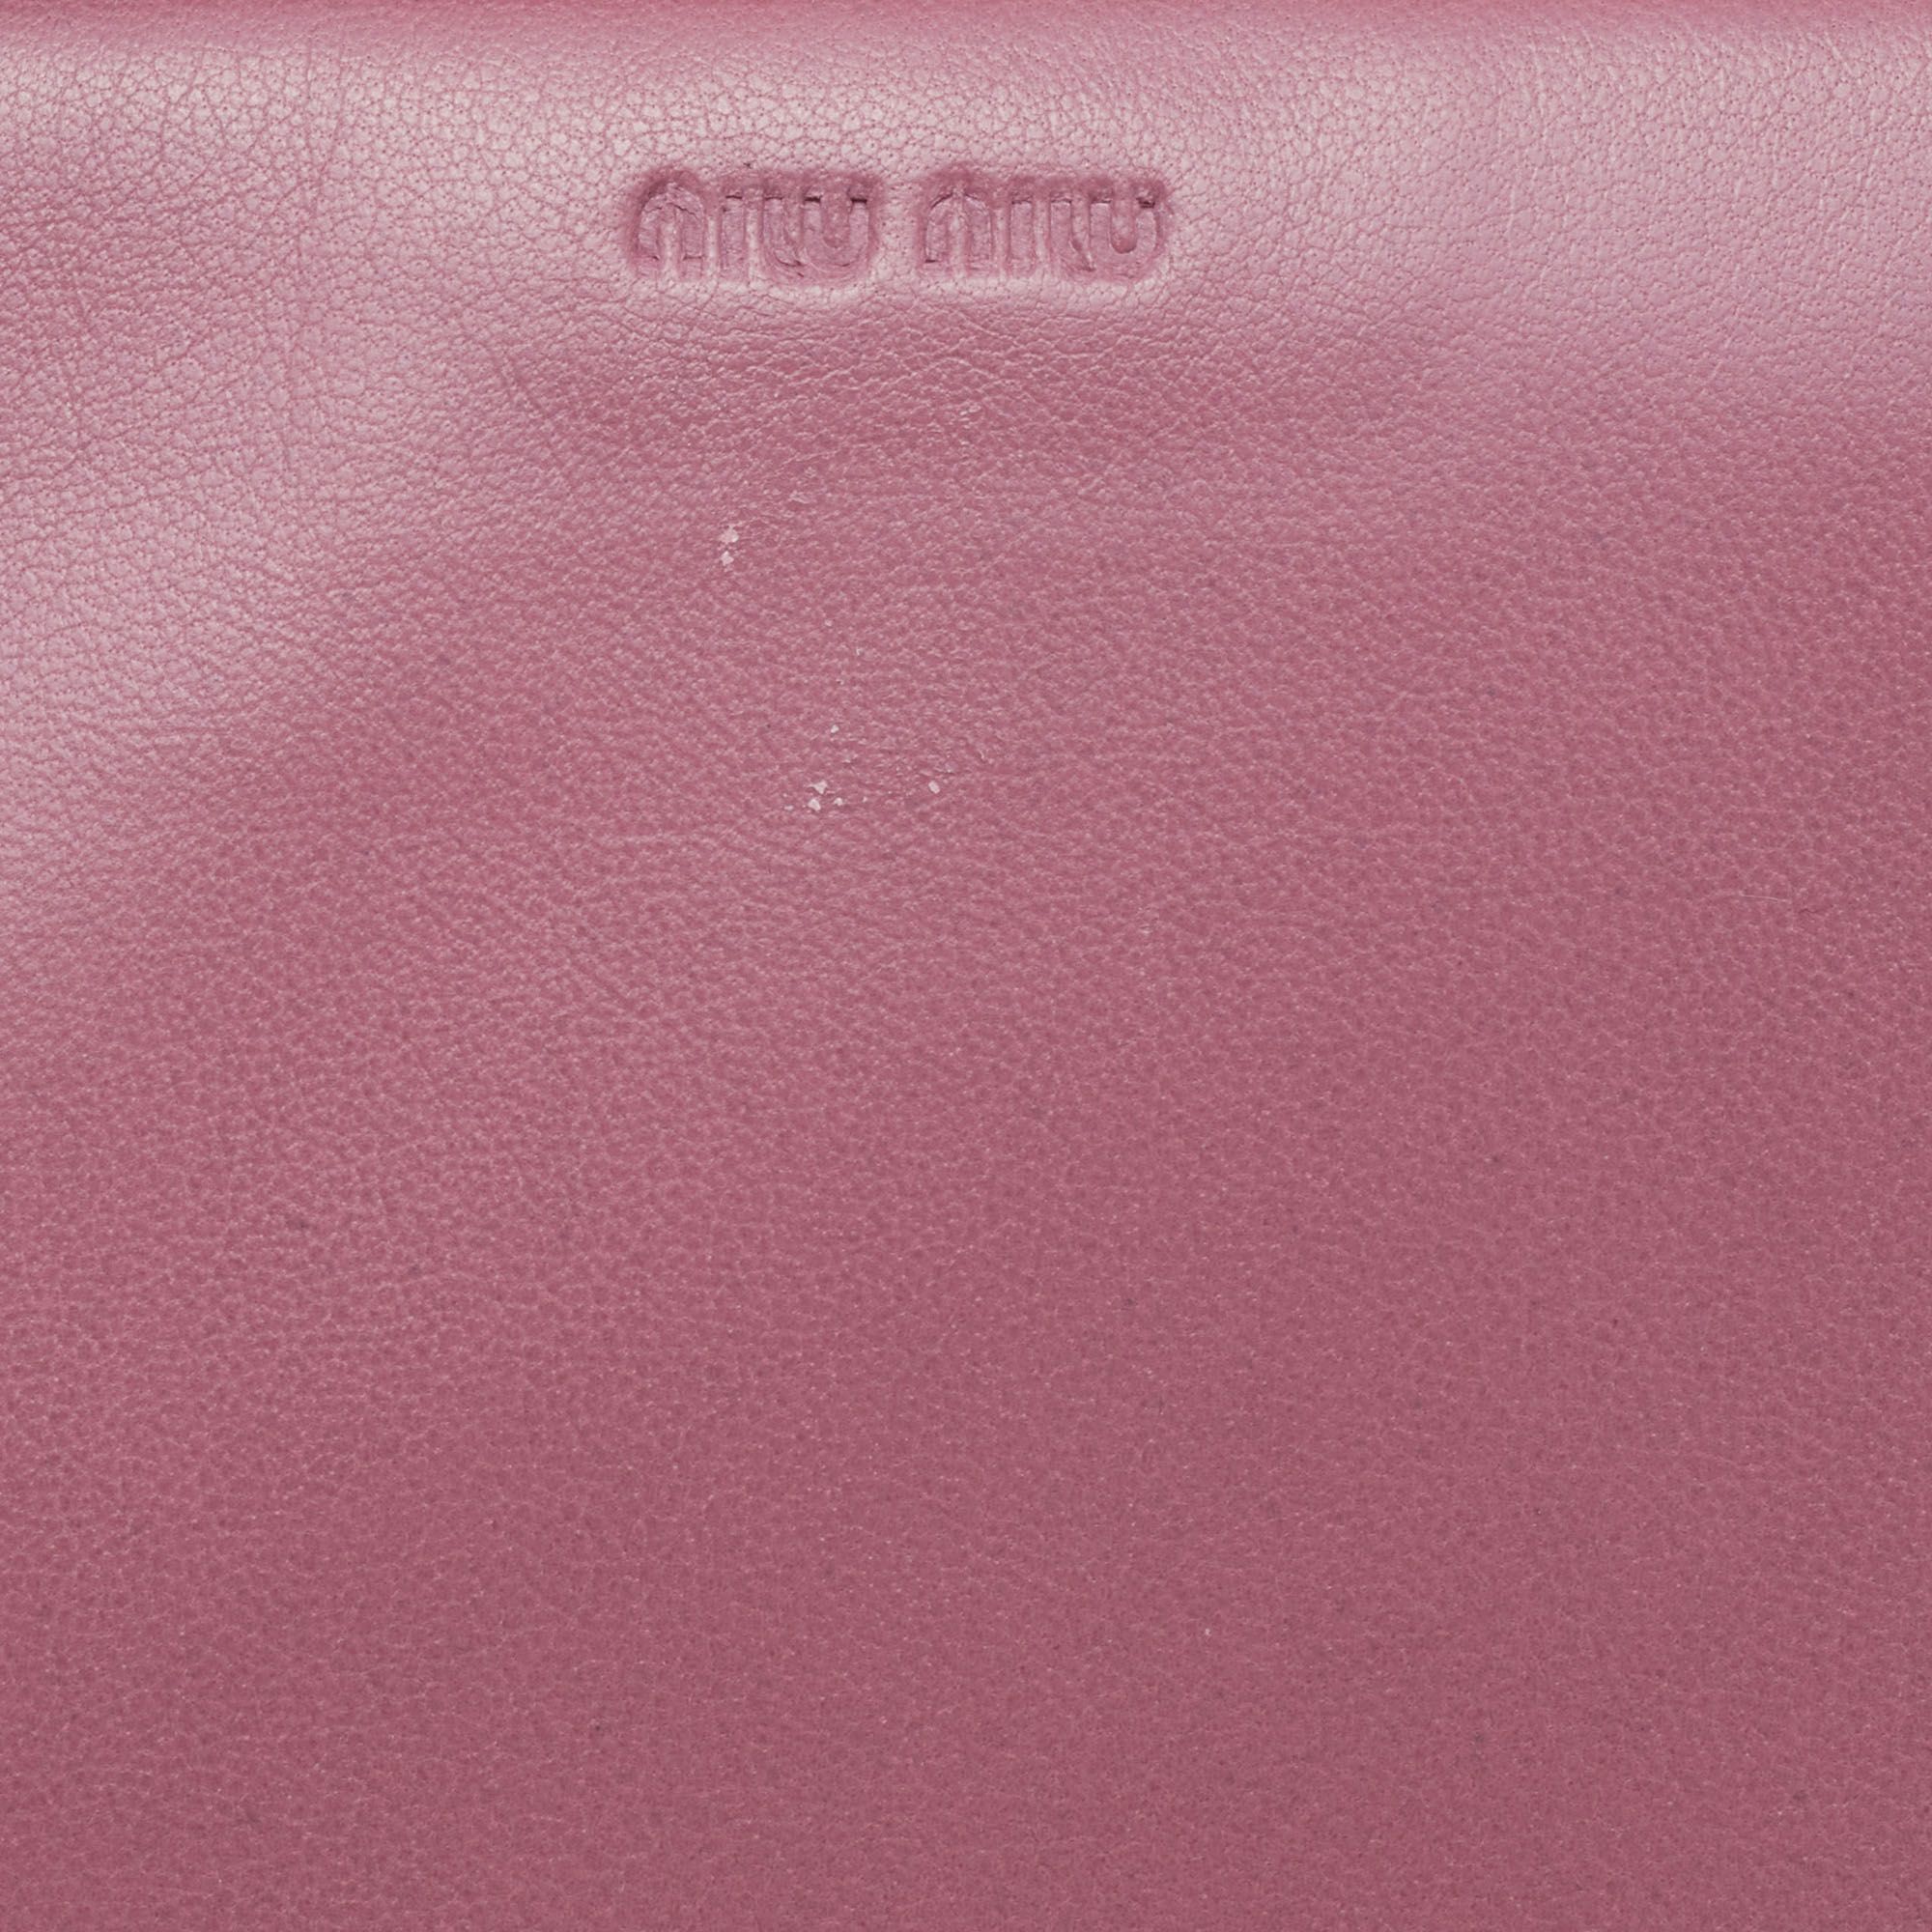 Miu Miu Pink Croc Embossed Patent Leather Zip Around IPad Cover